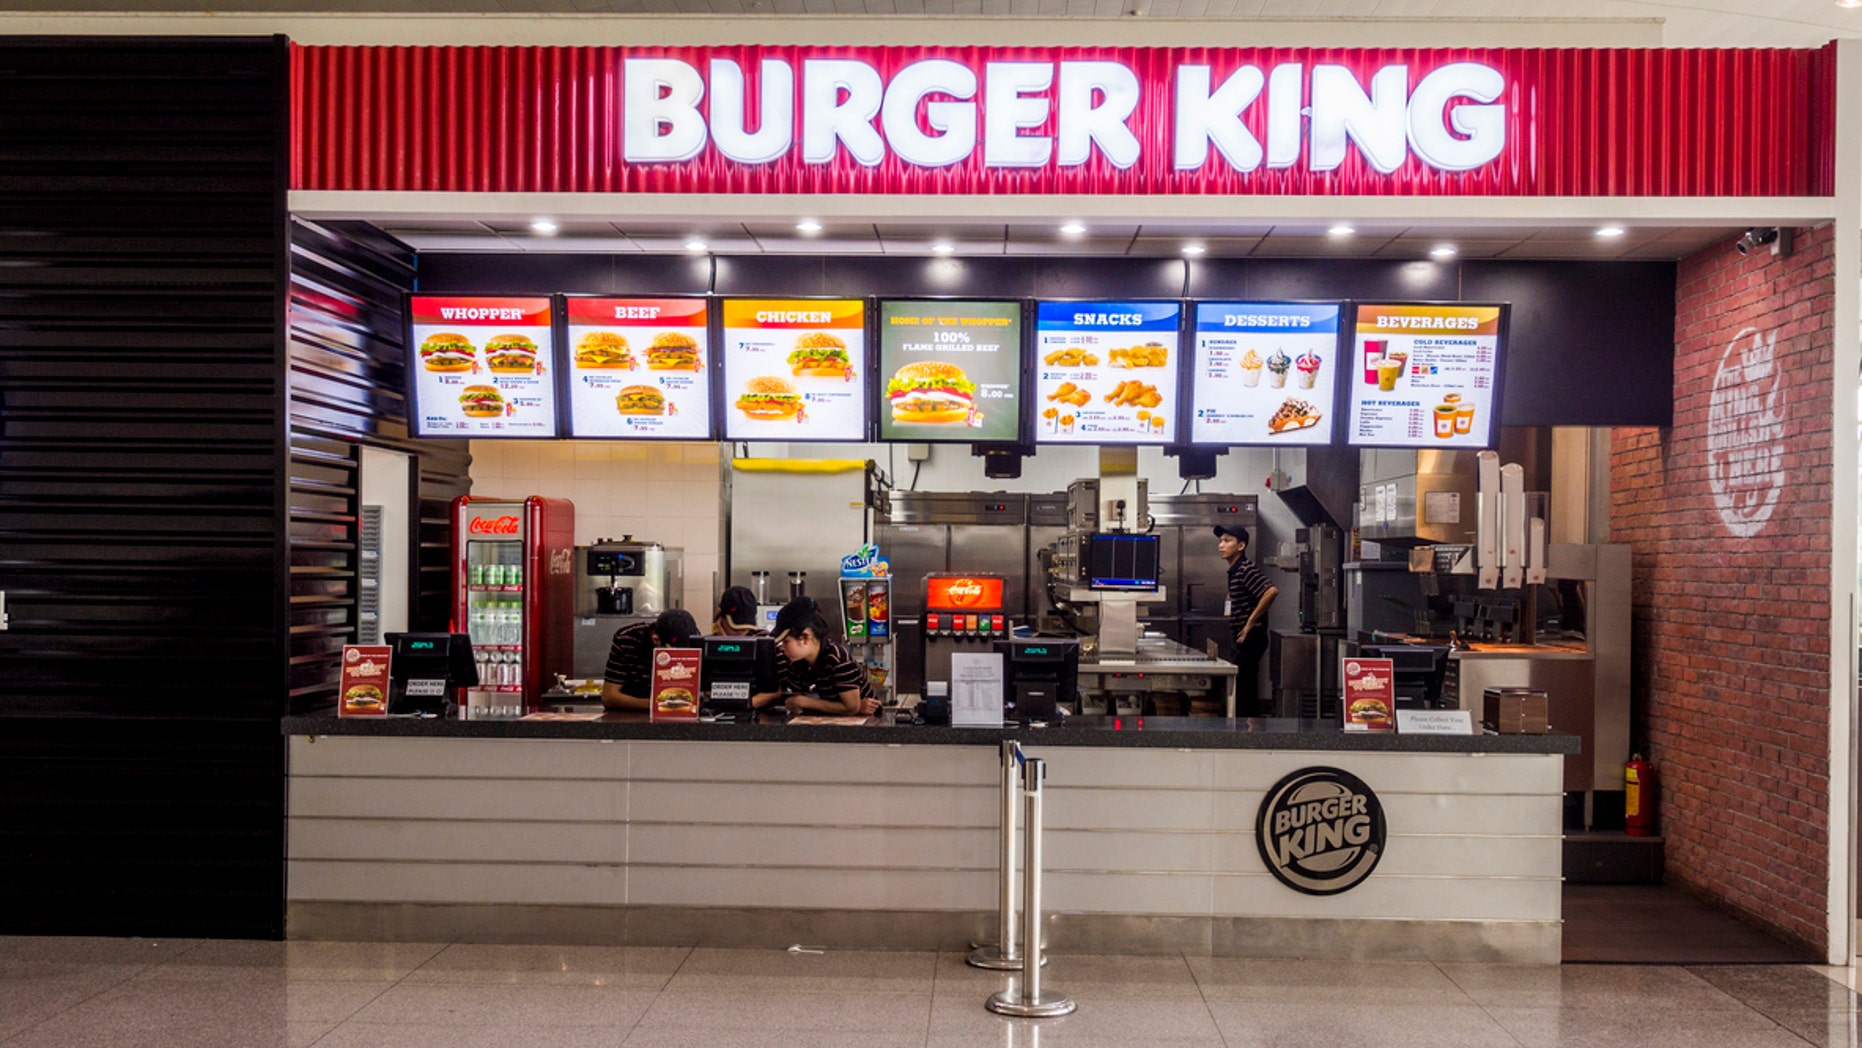 Burger King trolls McDonald’s with new menu featuring ‘Not Big Mac’s’